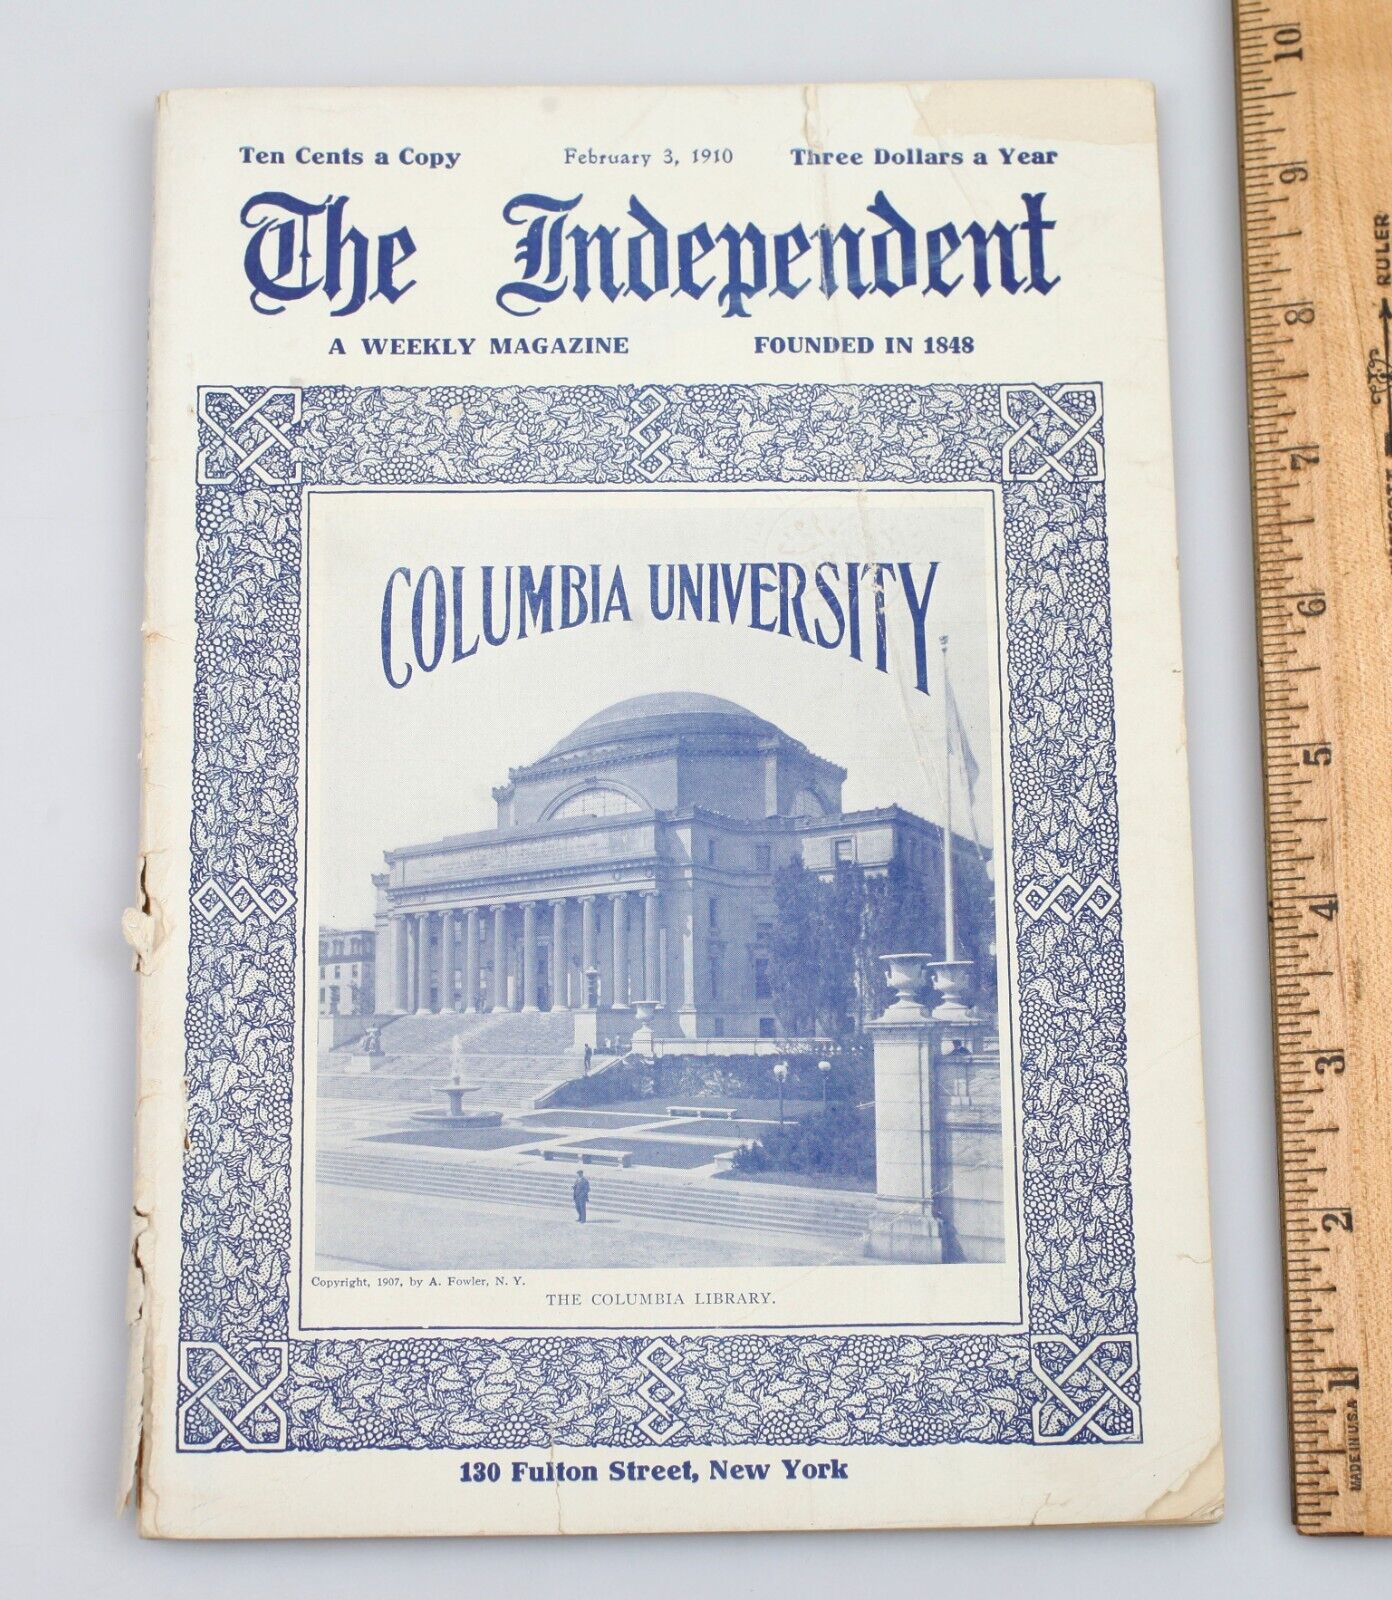 Vintage February 3, 1910 Columbia University The Independent Weekly Magazine